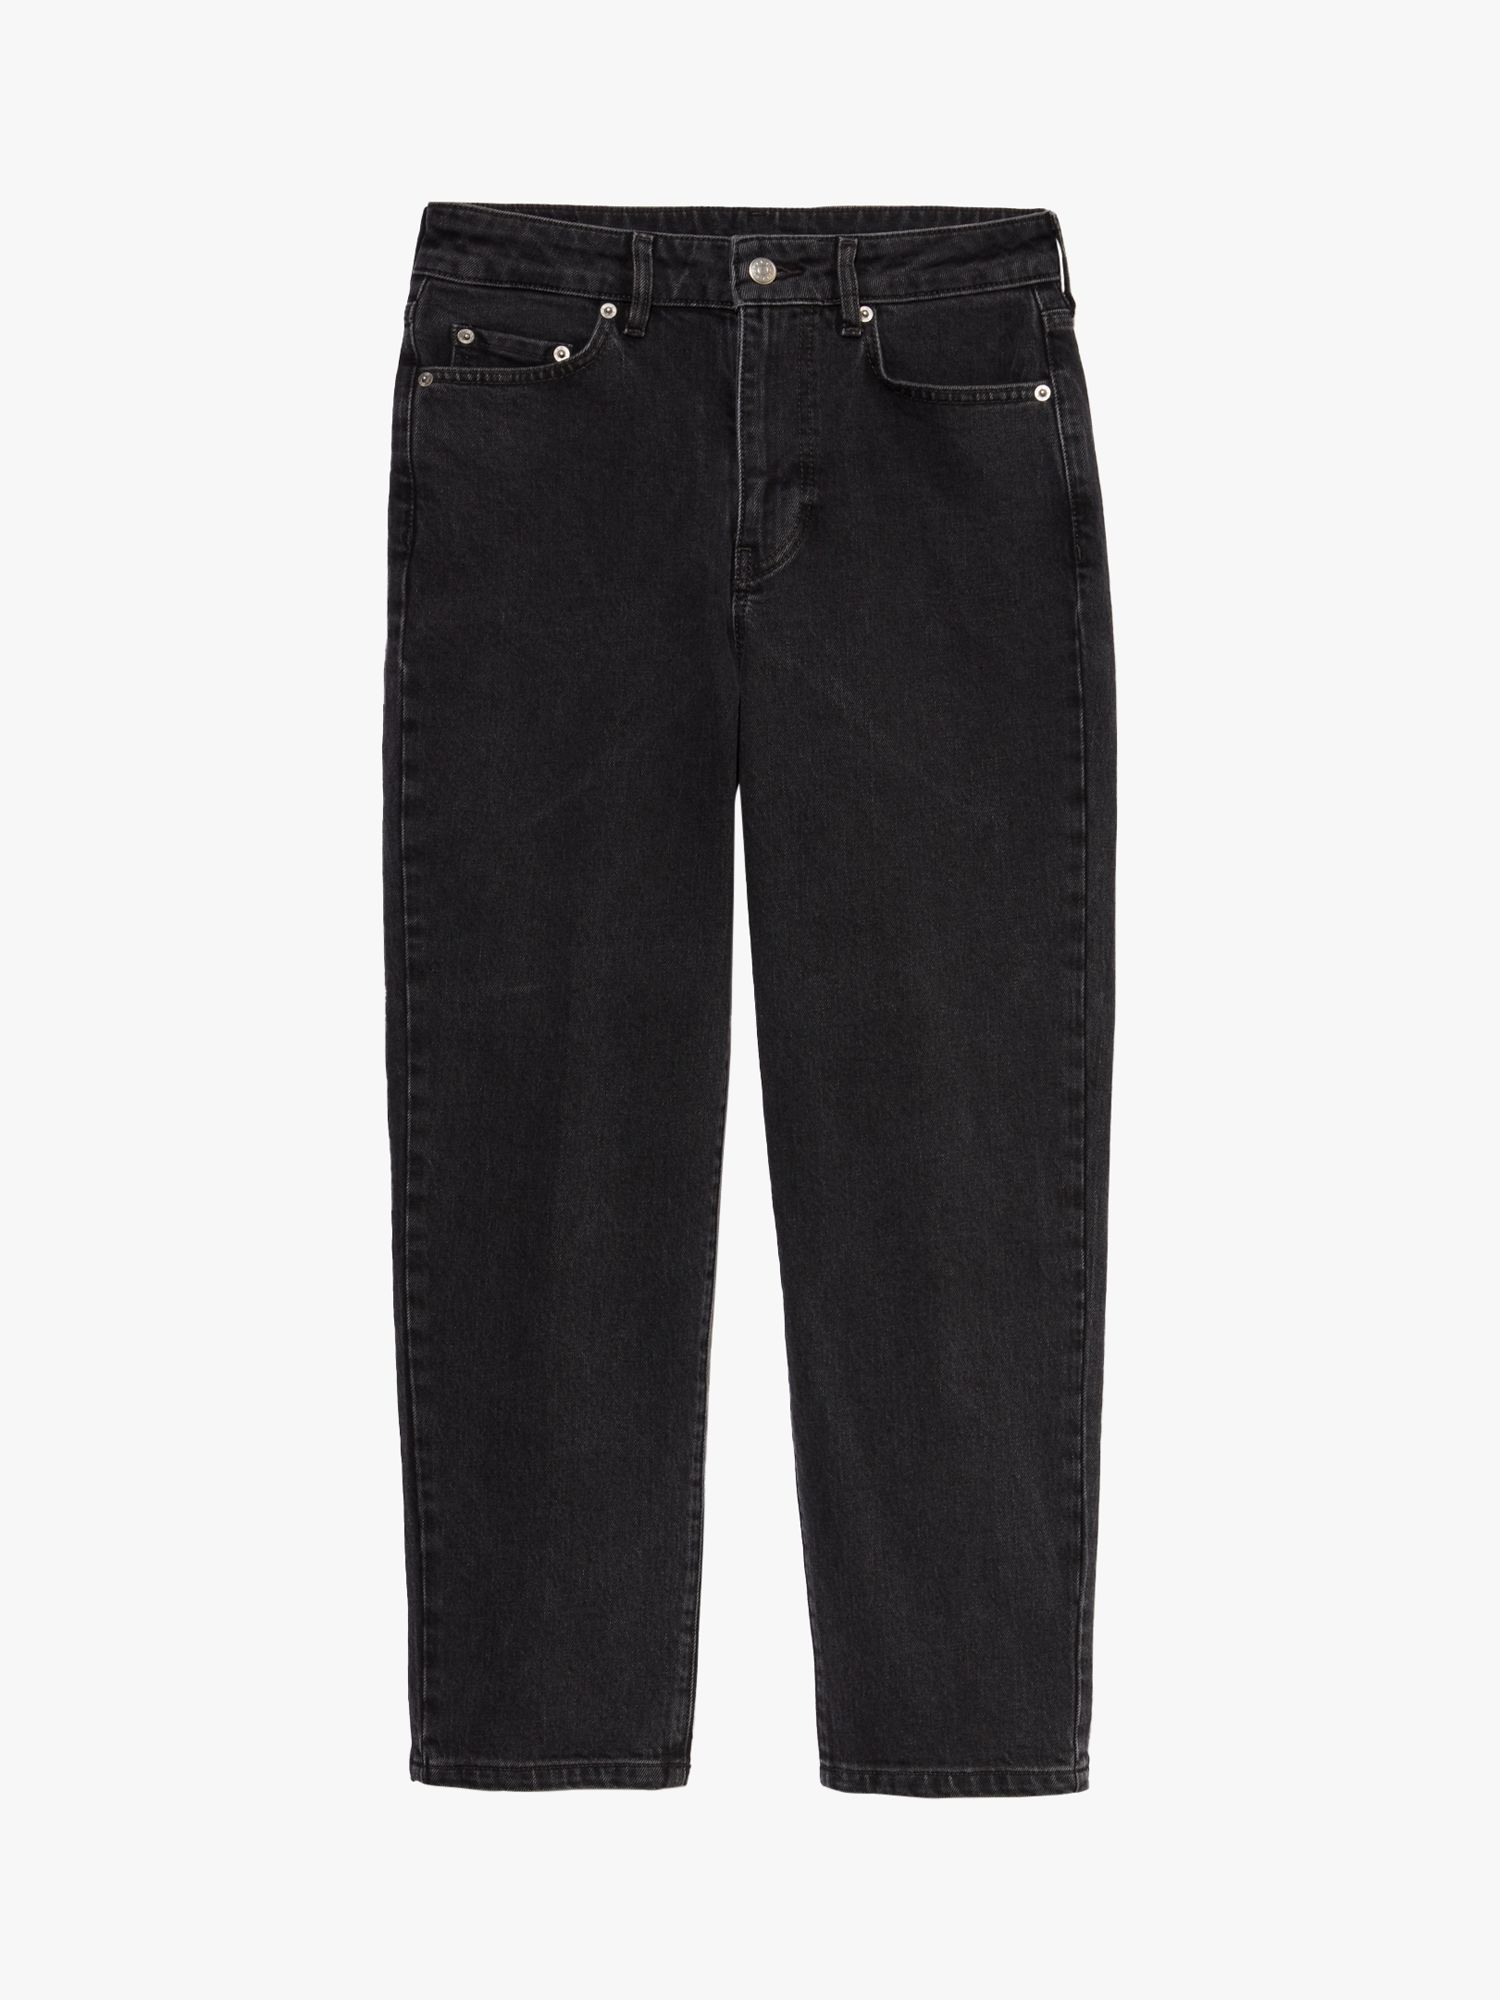 SISLEY Slim Fit Stretch Jeans, Black Denim, 31R